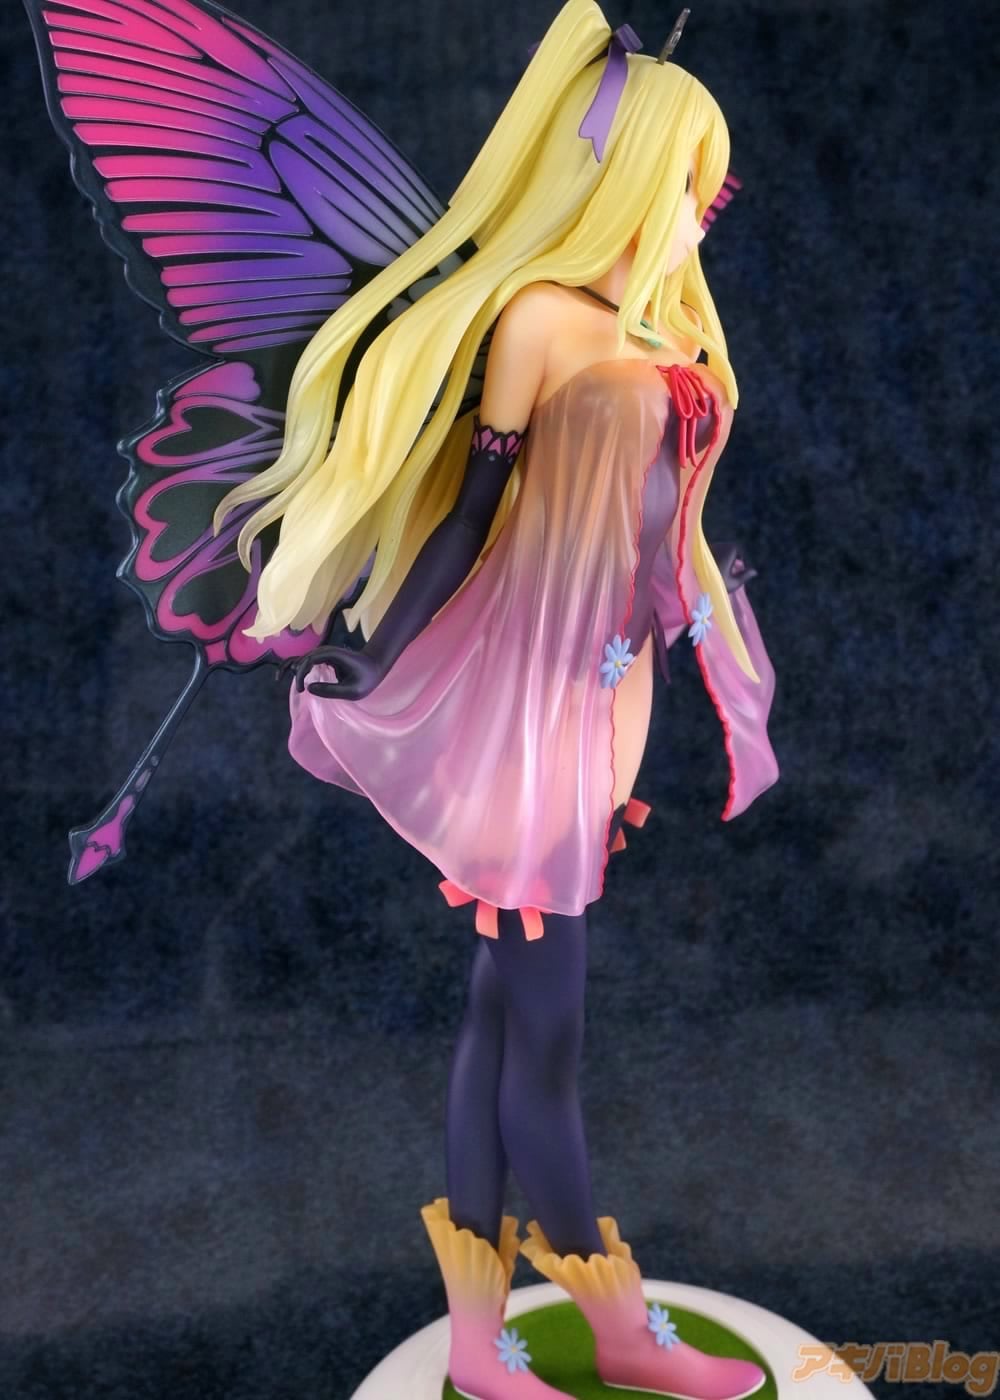 Tony'sヒロイン妖精少女 アナベルフィギュア発売 「妖艶な雰囲気の可愛らしい表情」 : アキバBlog